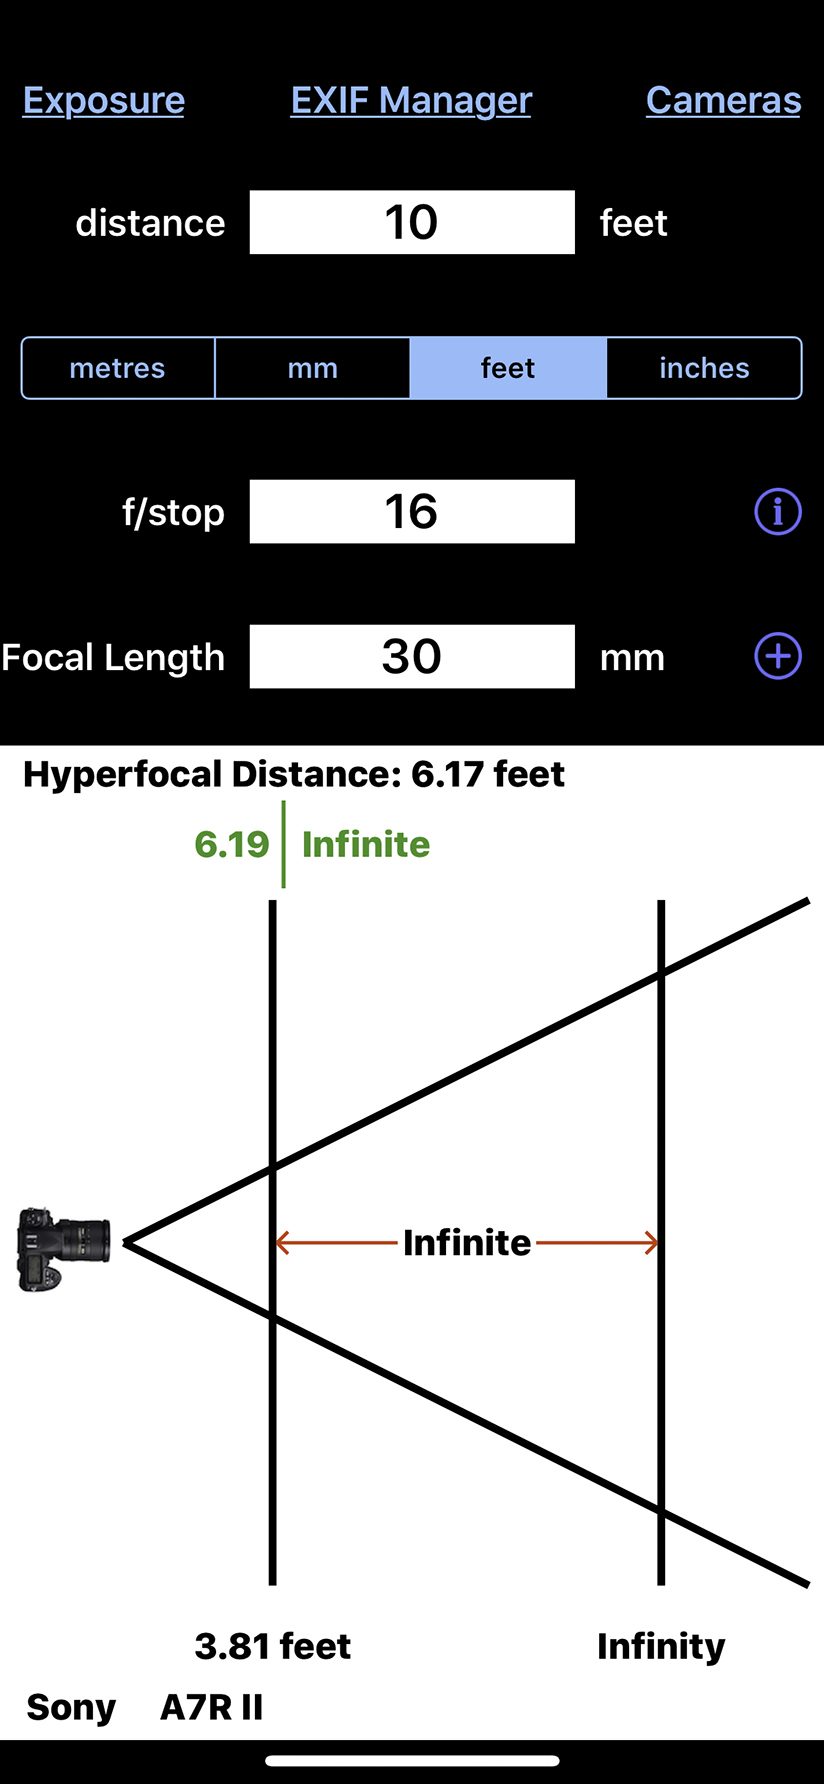 Apps like Focal can help determine settings for hyperfocal focusing